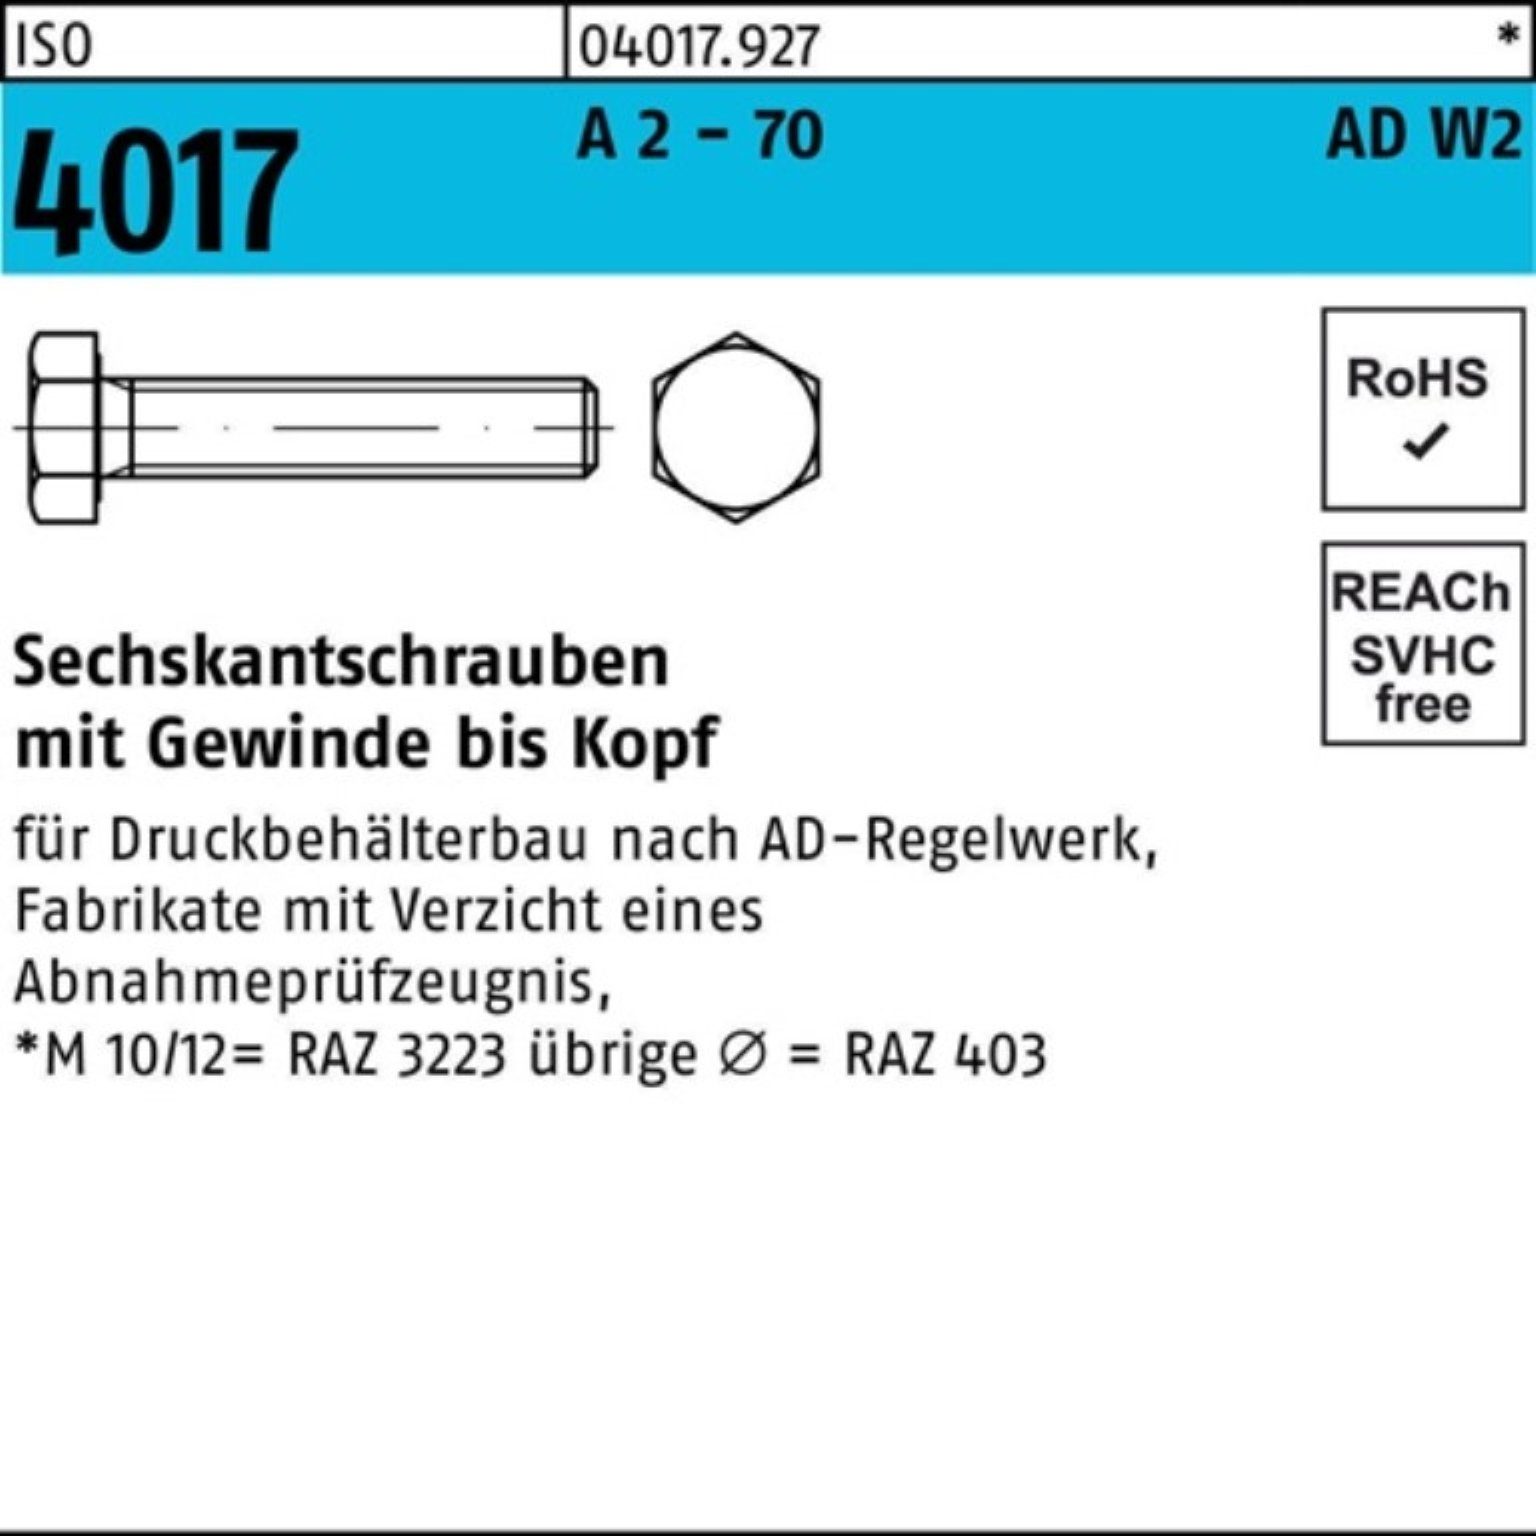 Bufab Sechskantschraube 100er Pack Sechskantschraube ISO 4017 VG M20x 30 A 2 - 70 AD-W2 25 St